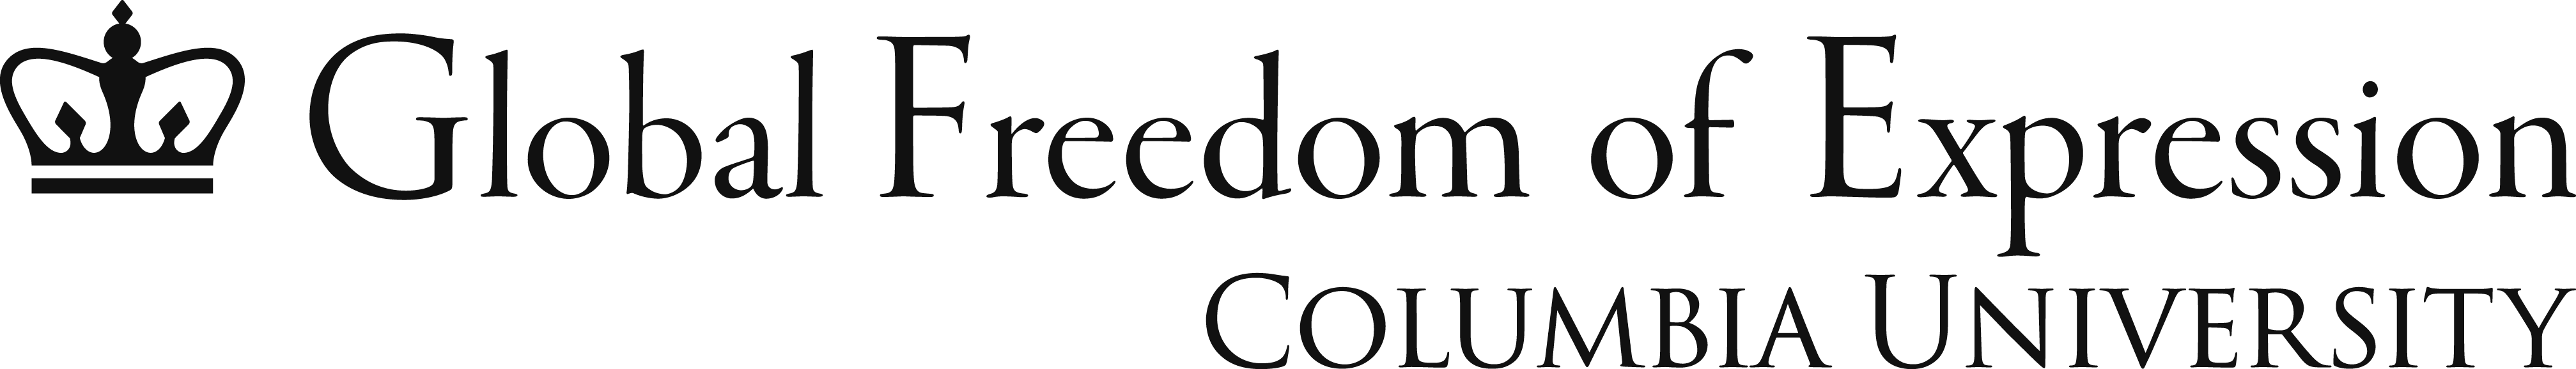 https://tealmedia.com/wp-content/uploads/2019/10/logo-global-freedom-of-expression-500x72.png